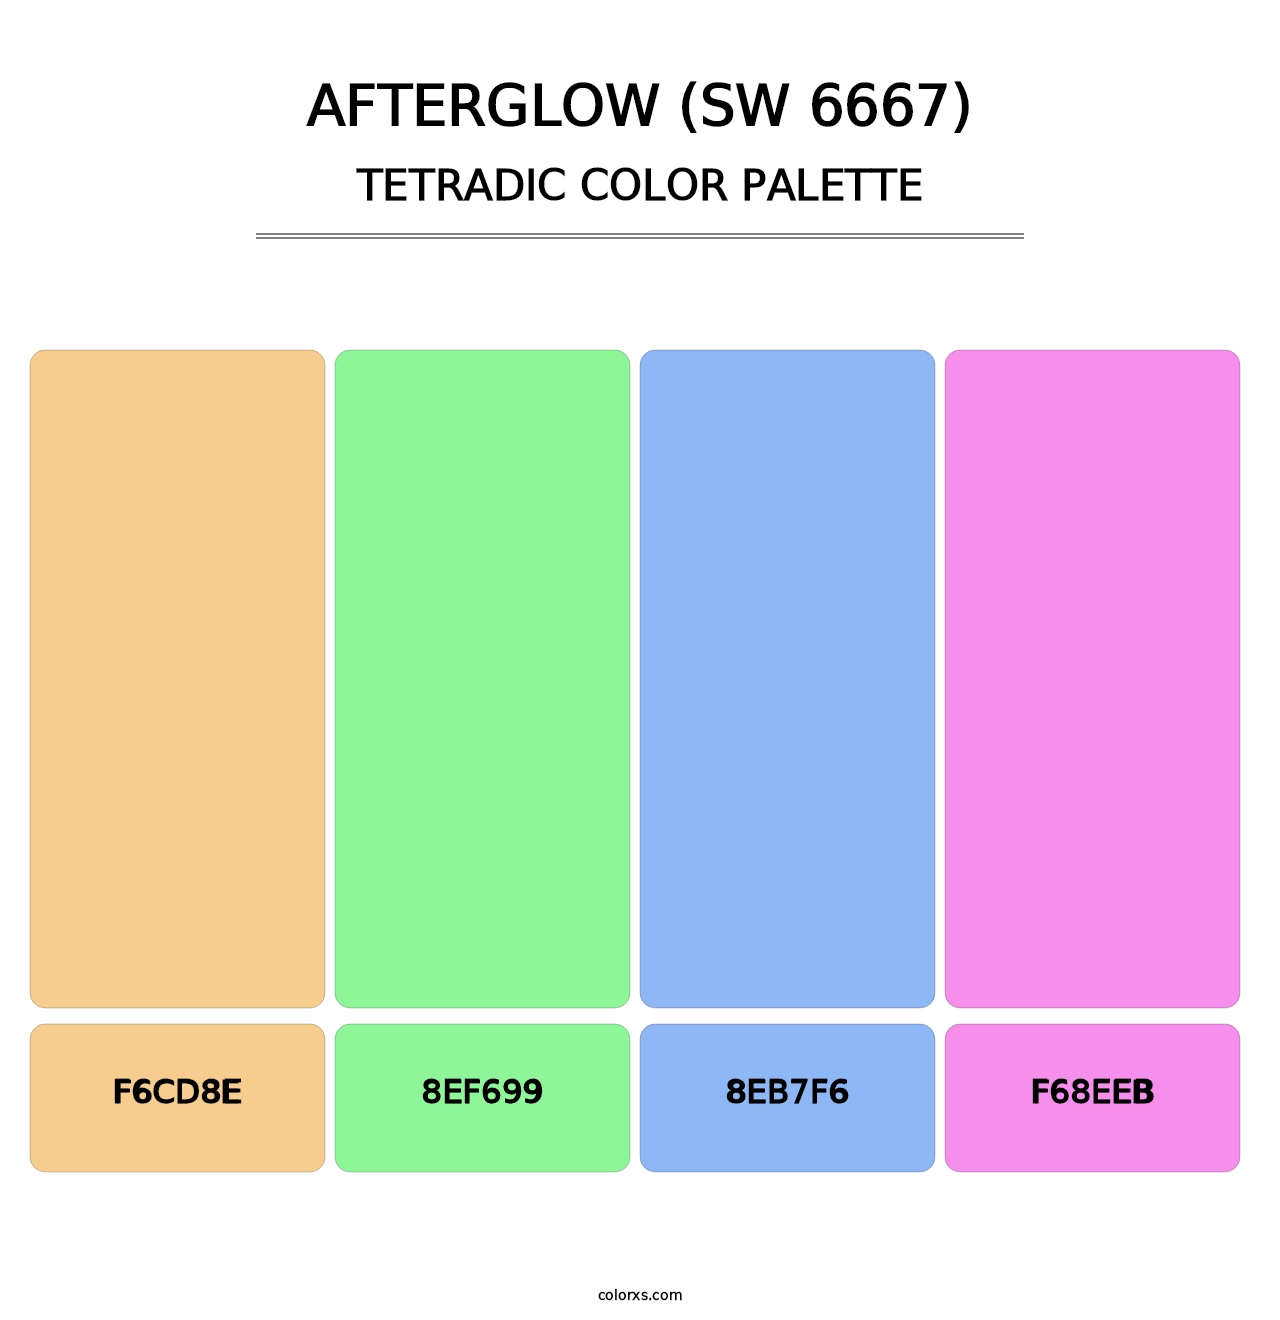 Afterglow (SW 6667) - Tetradic Color Palette